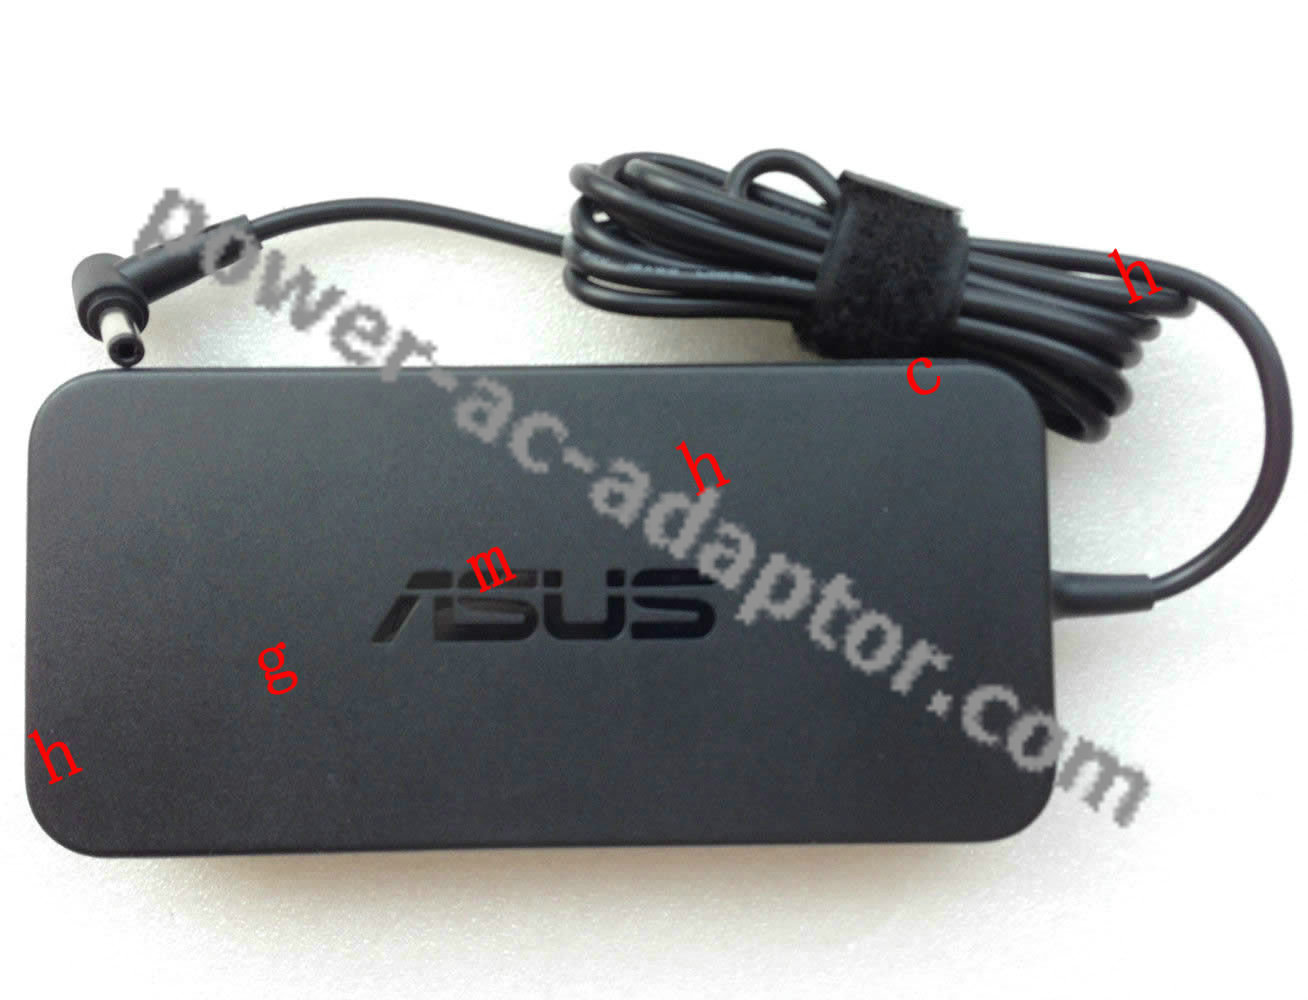 Genuine OEM Asus 120W Slim G60Vx Q9000 Gaming AC Adapter for